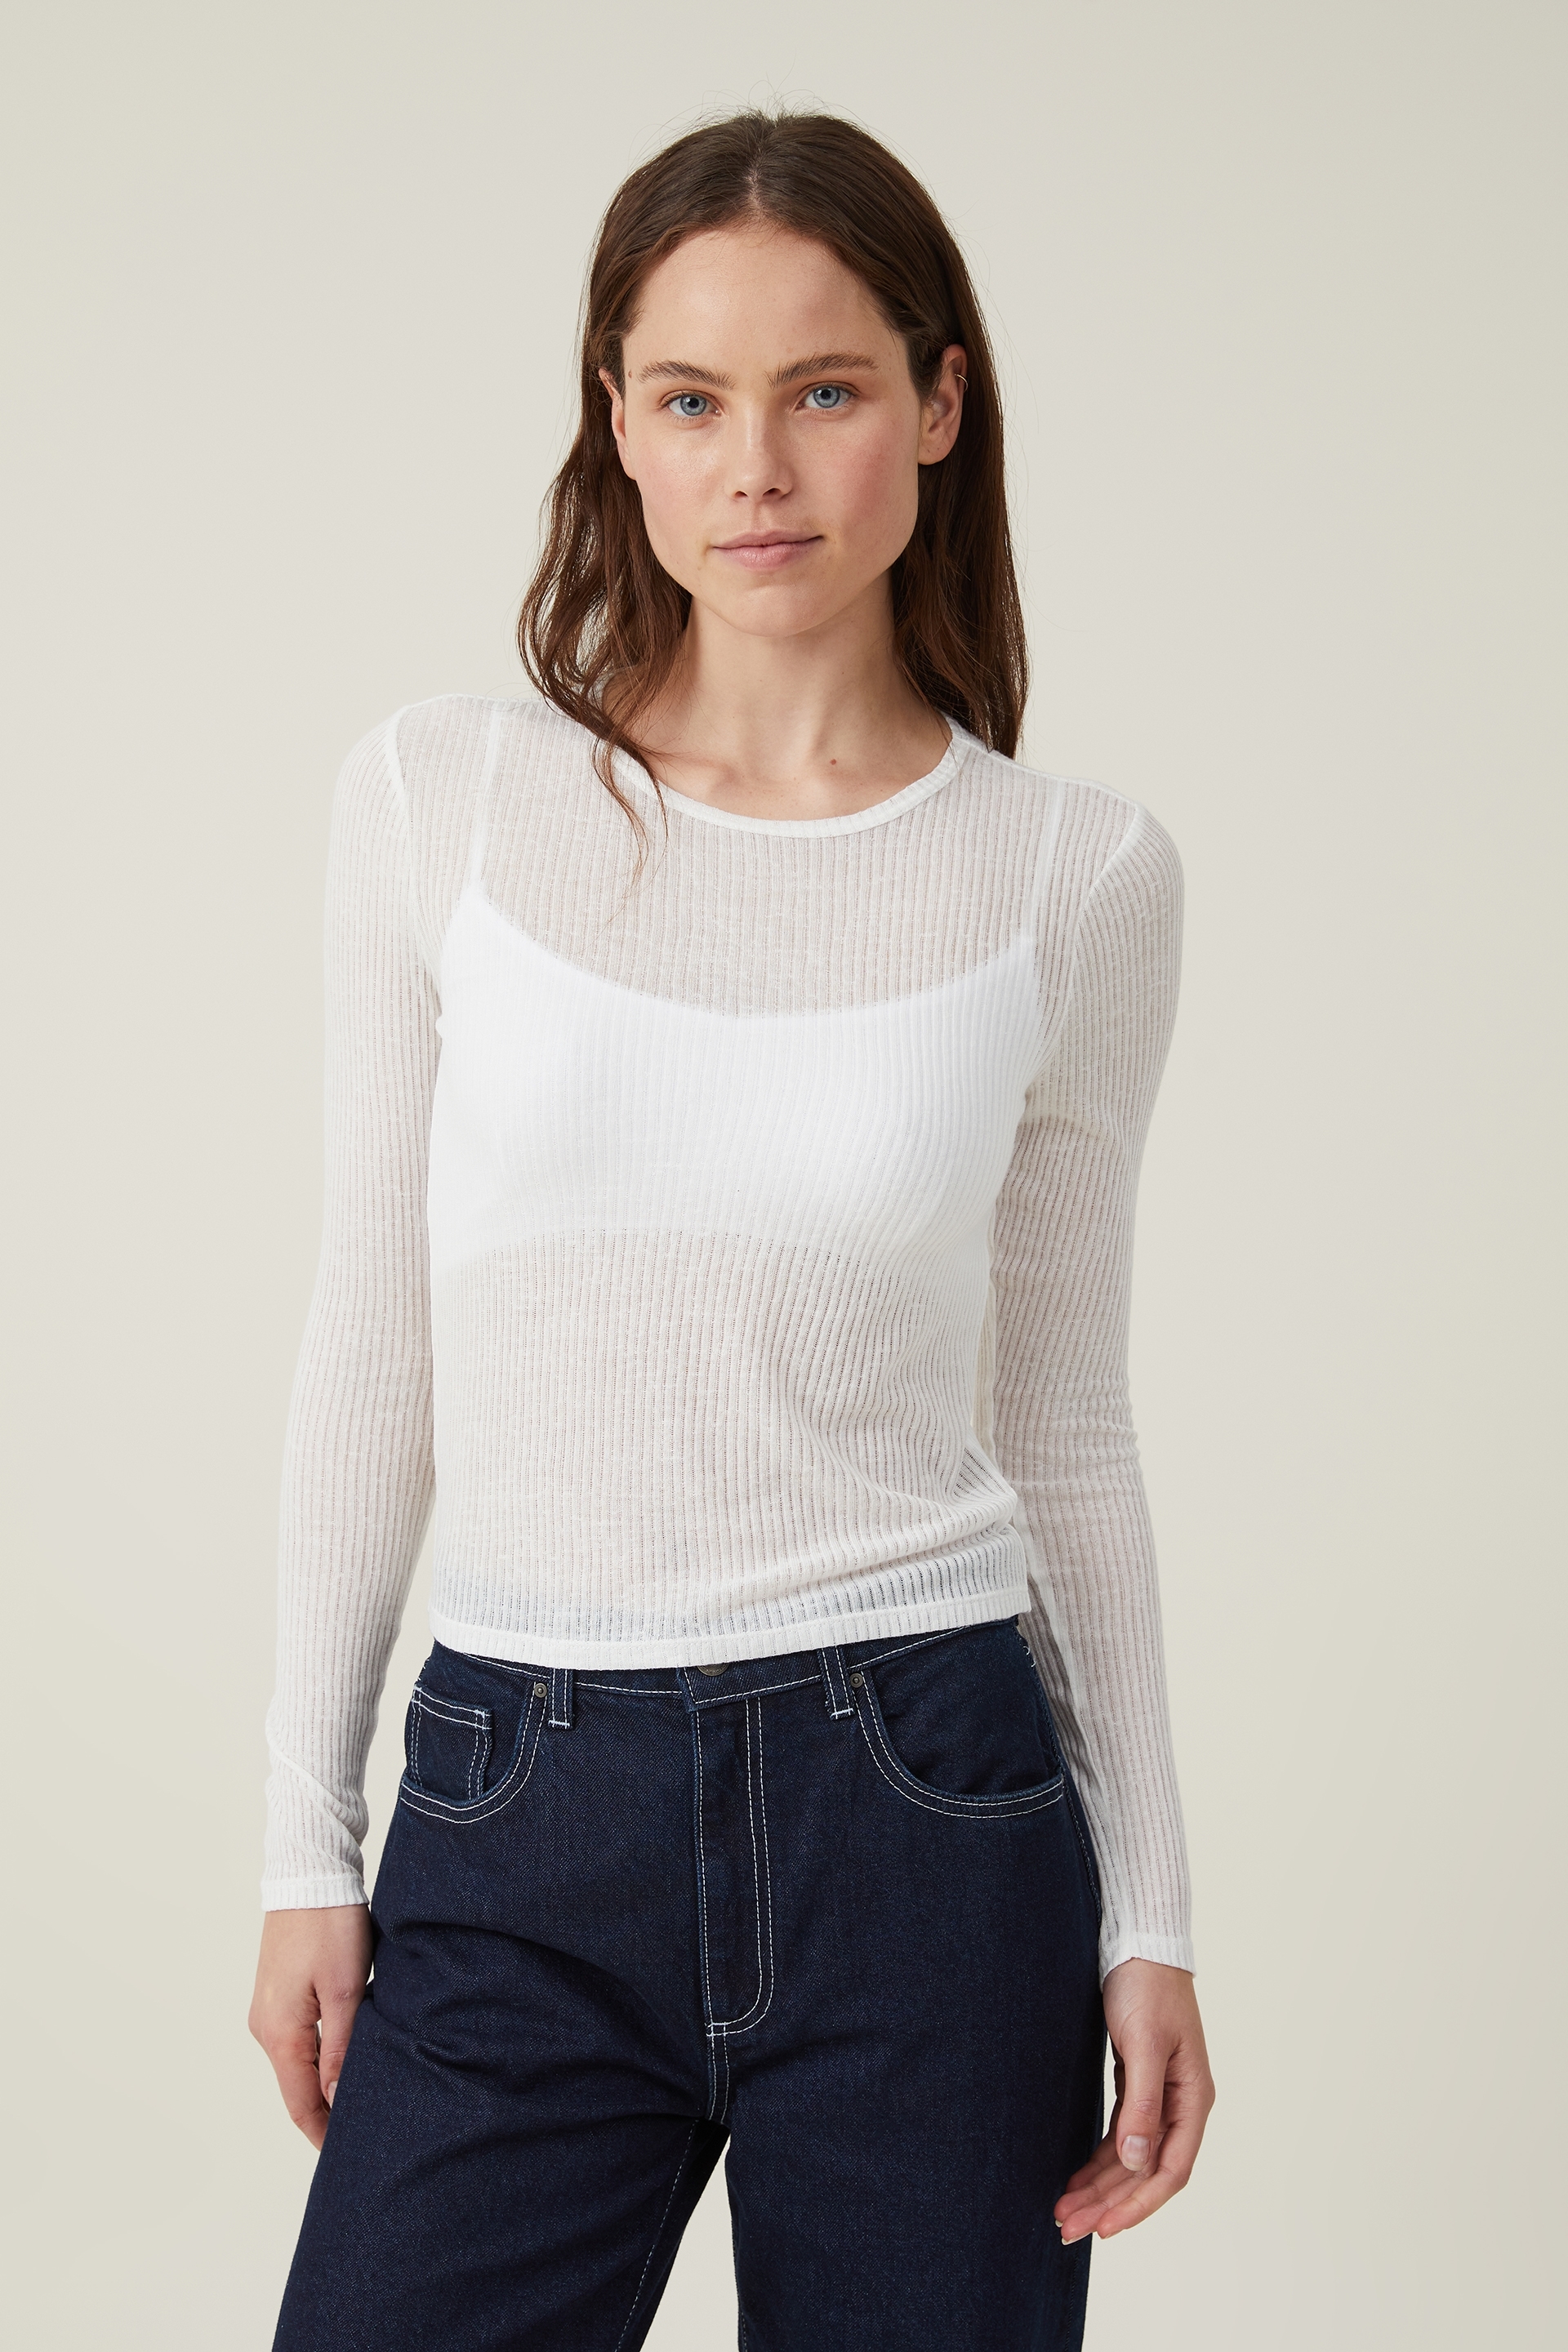 Cotton On Women - Ricki Sheer Rib Long Sleeve Top - White